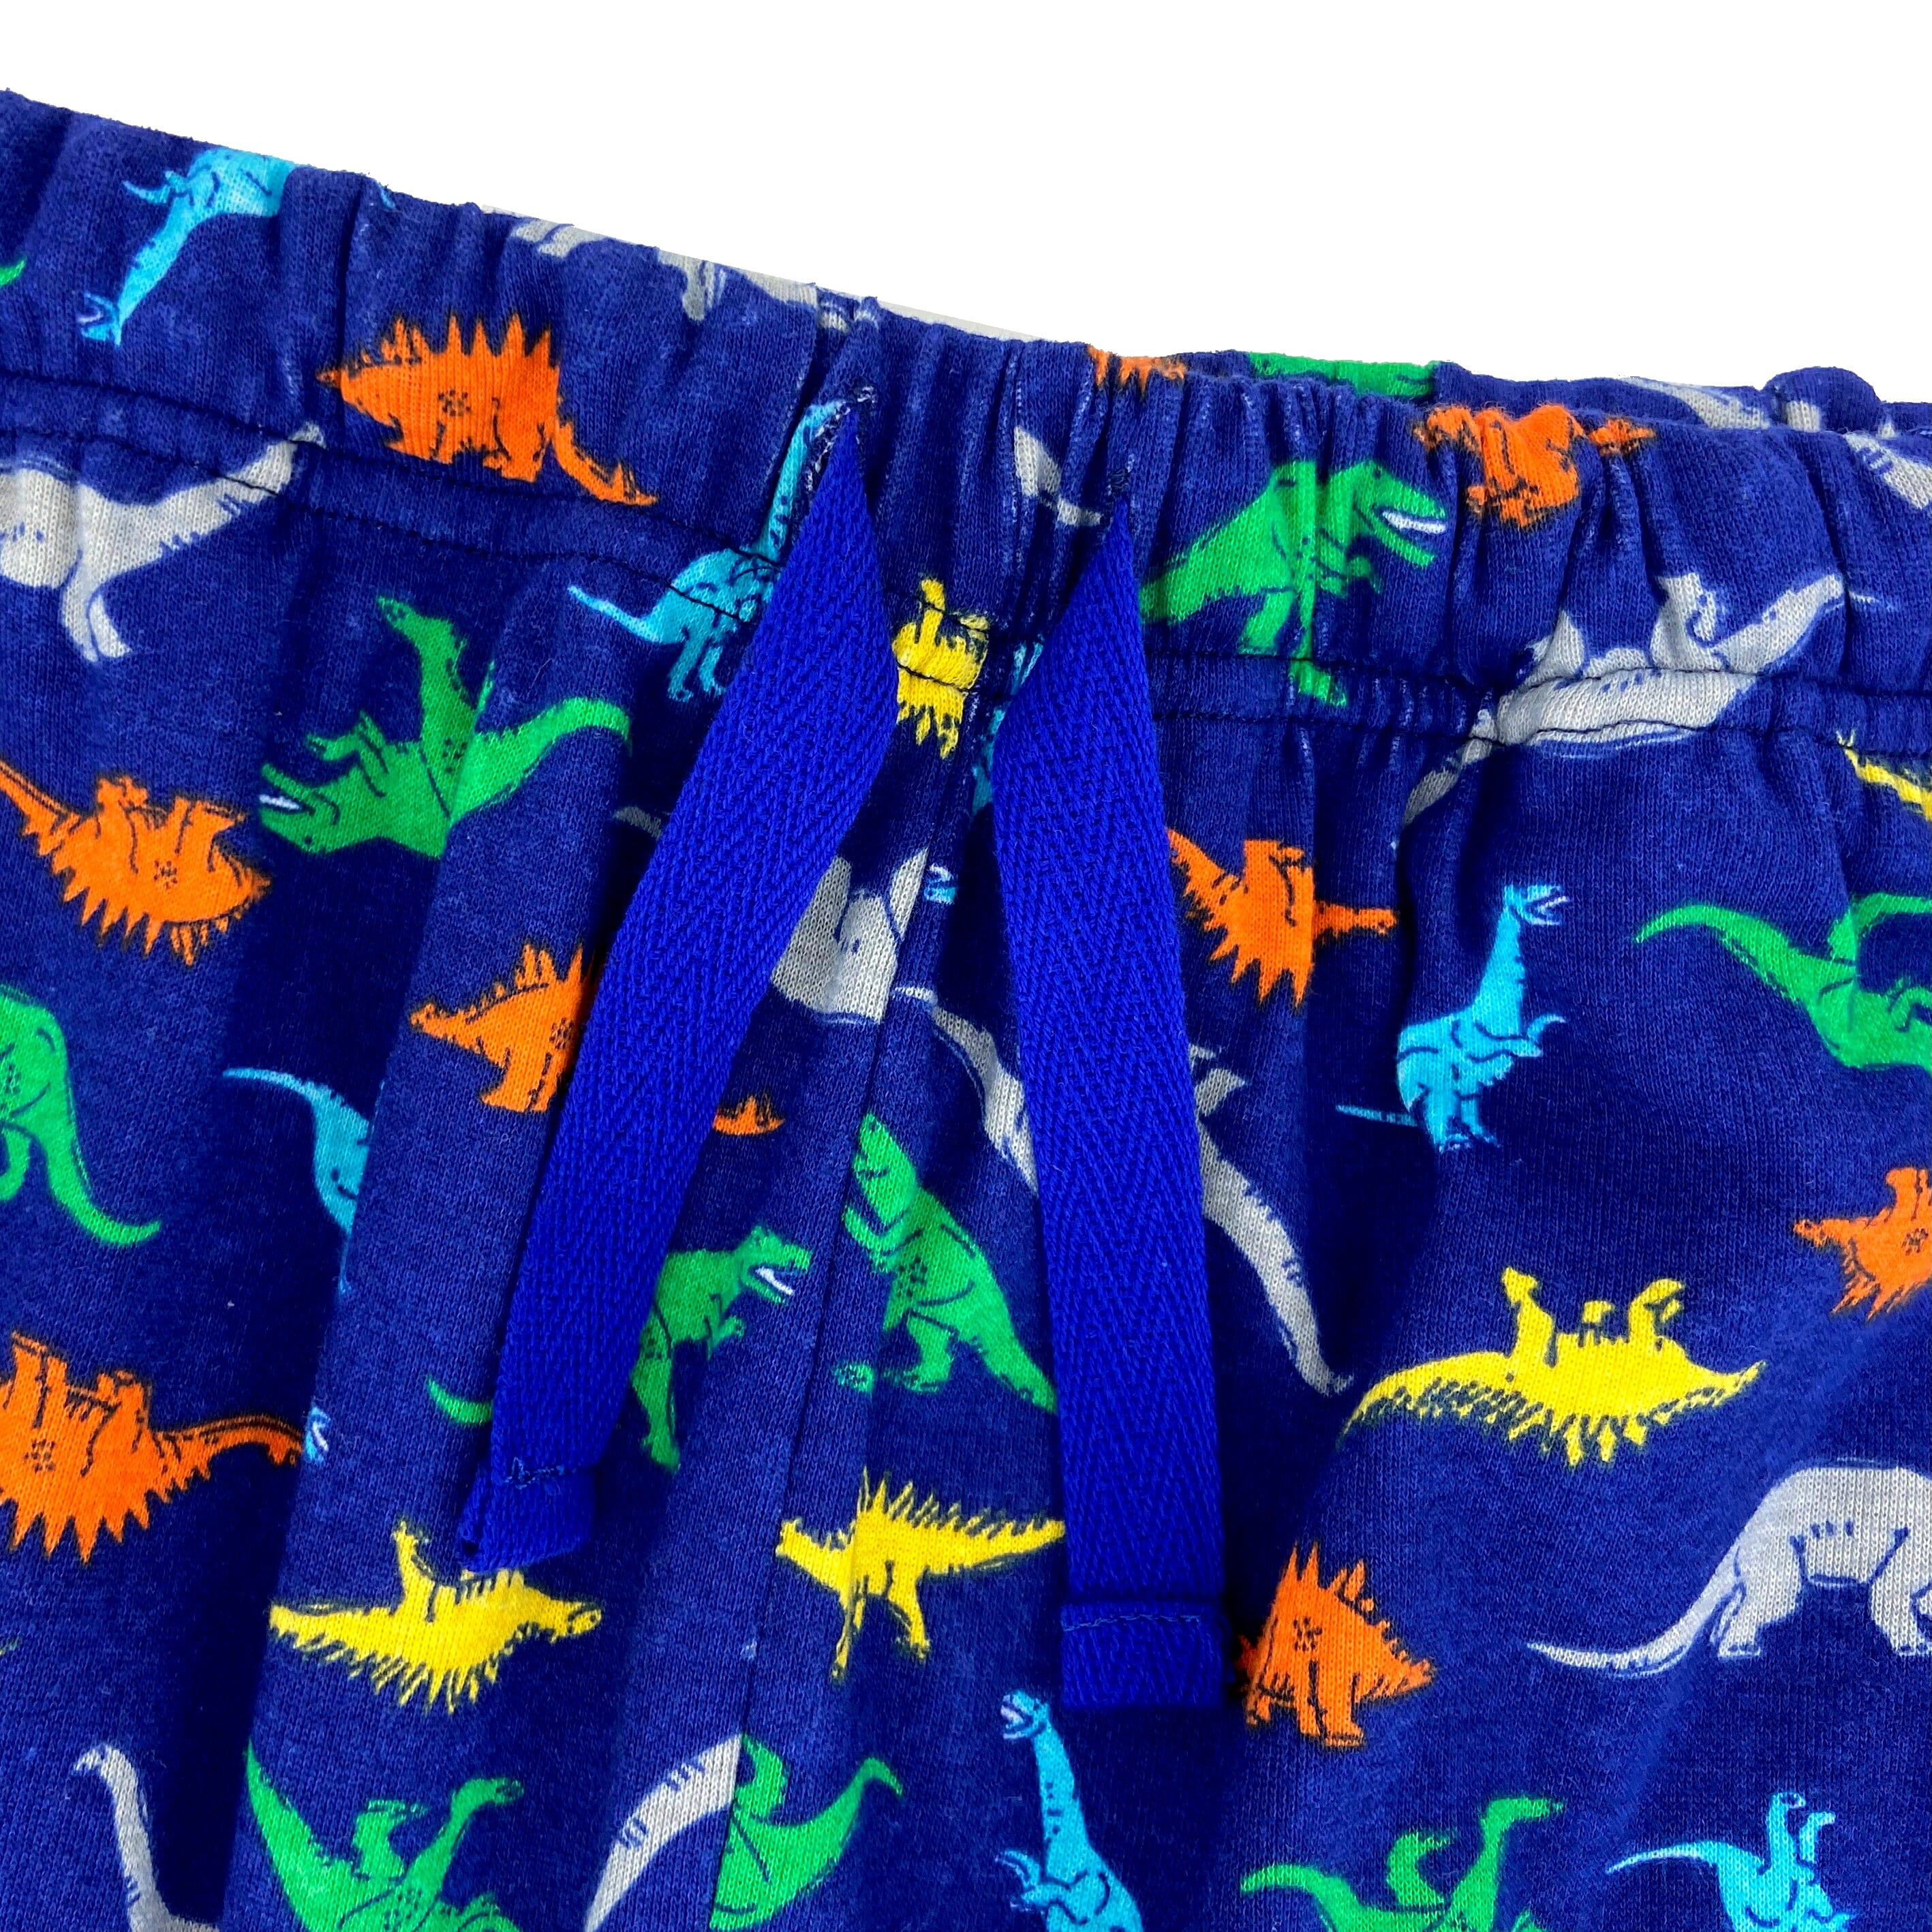 Adult Men's Dinosaur All Over Print Cotton Knit Long Pyjama Bottoms